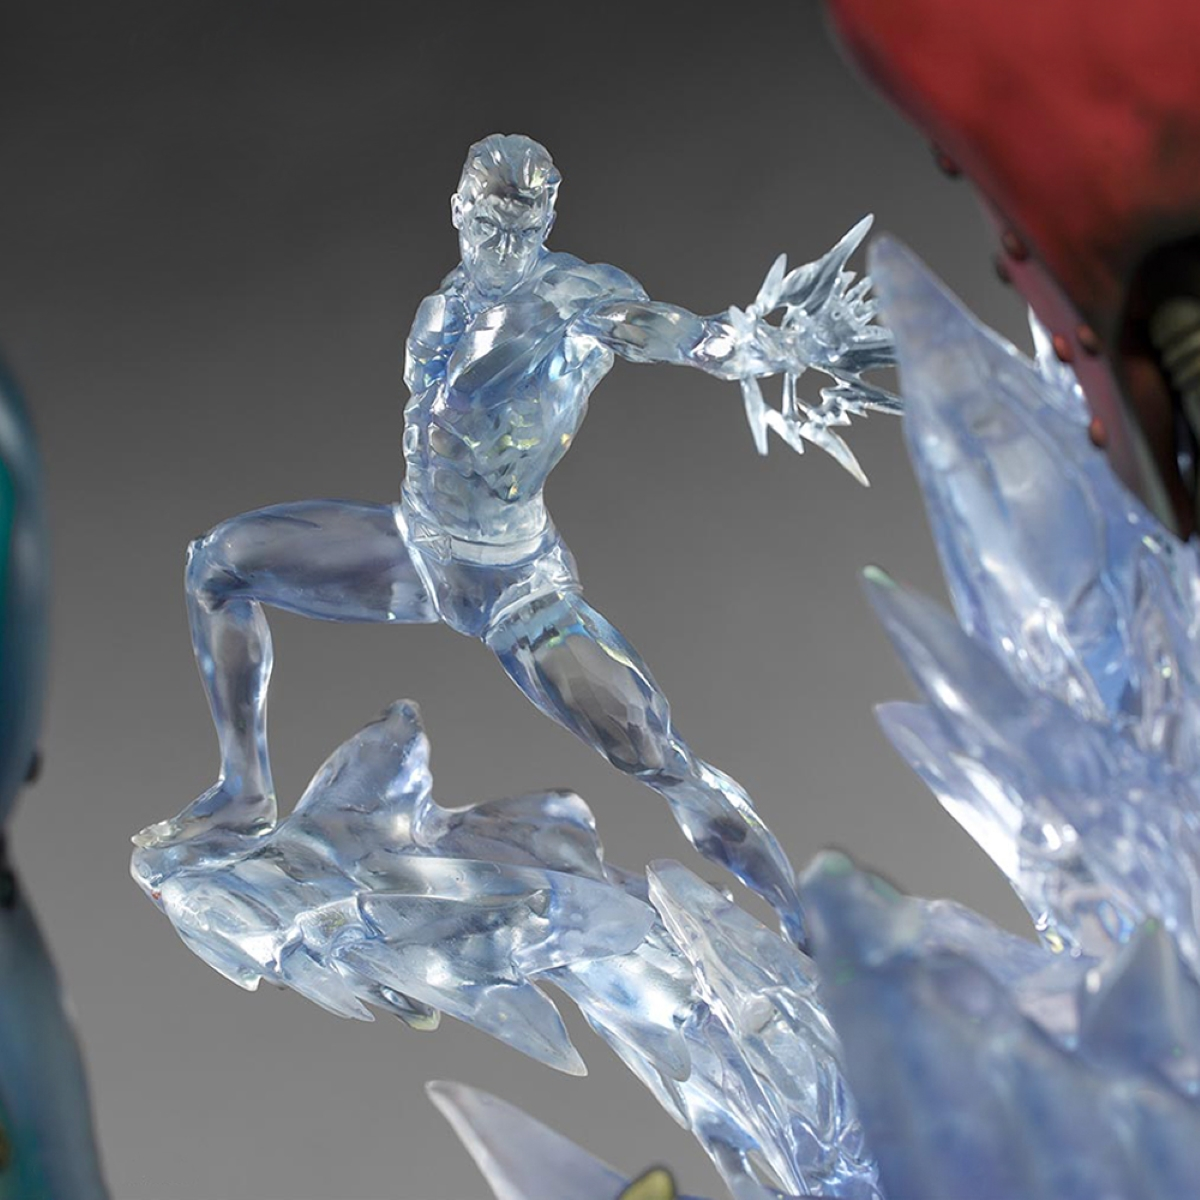 IRON STUDIOS X-Men Deluxe Statue Sentinel 1/10 vs. Sammelfigur